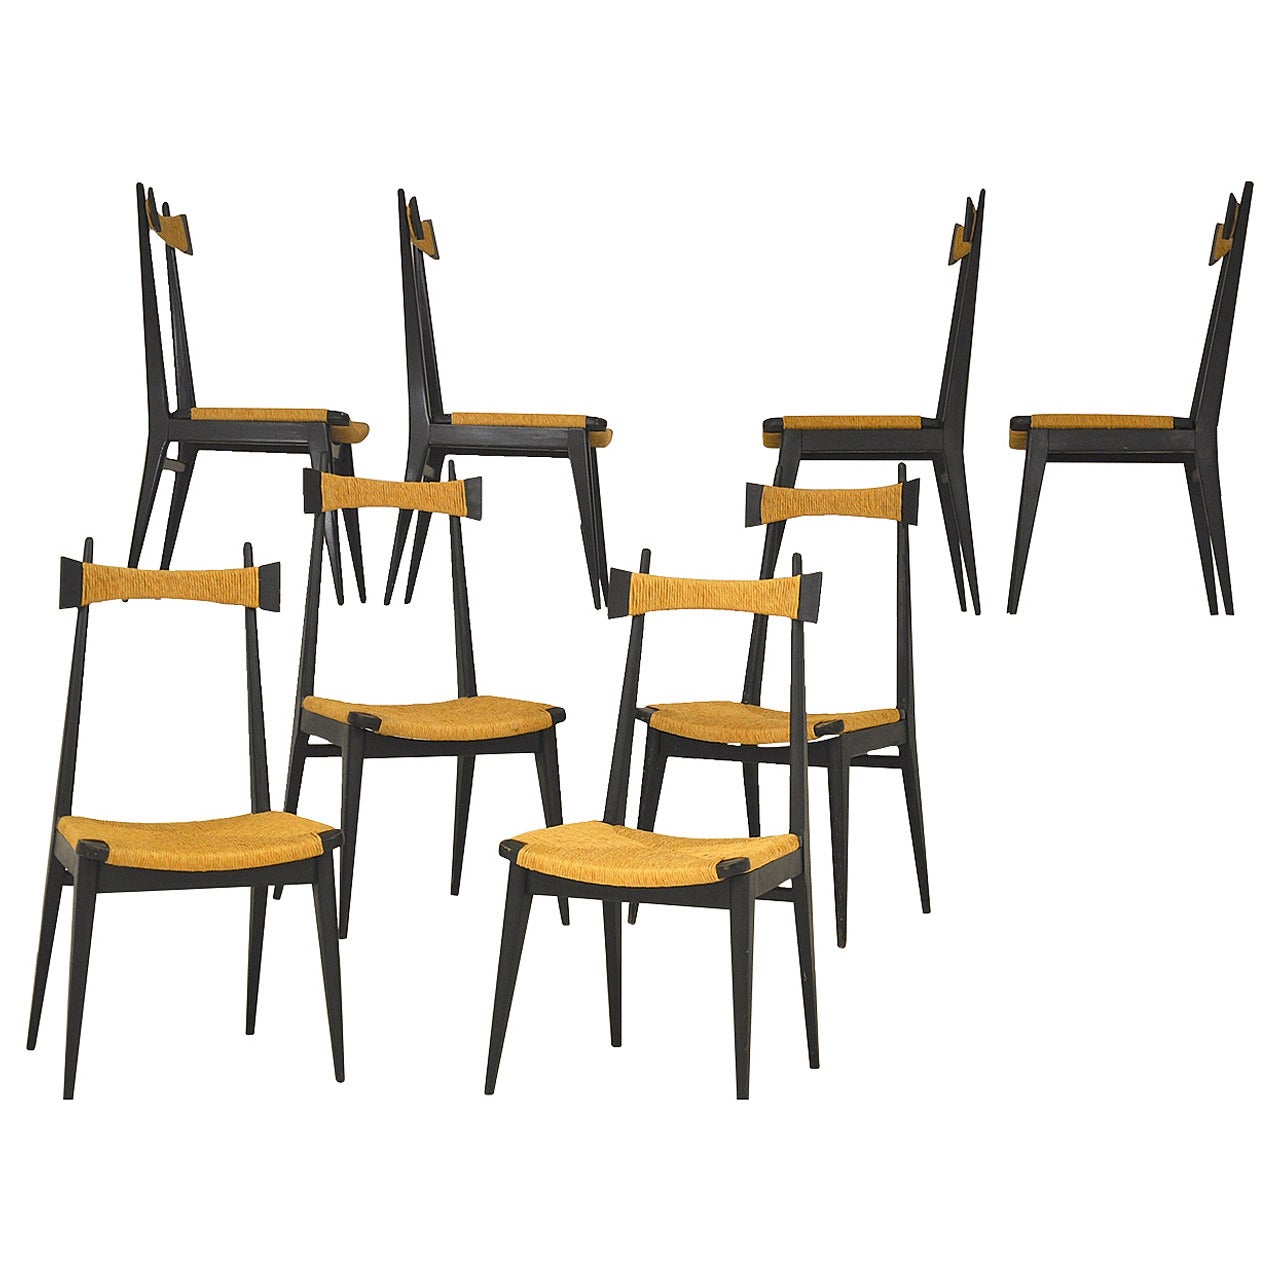 Set of EIght iItalian Chairs in the Style of Gio Ponti